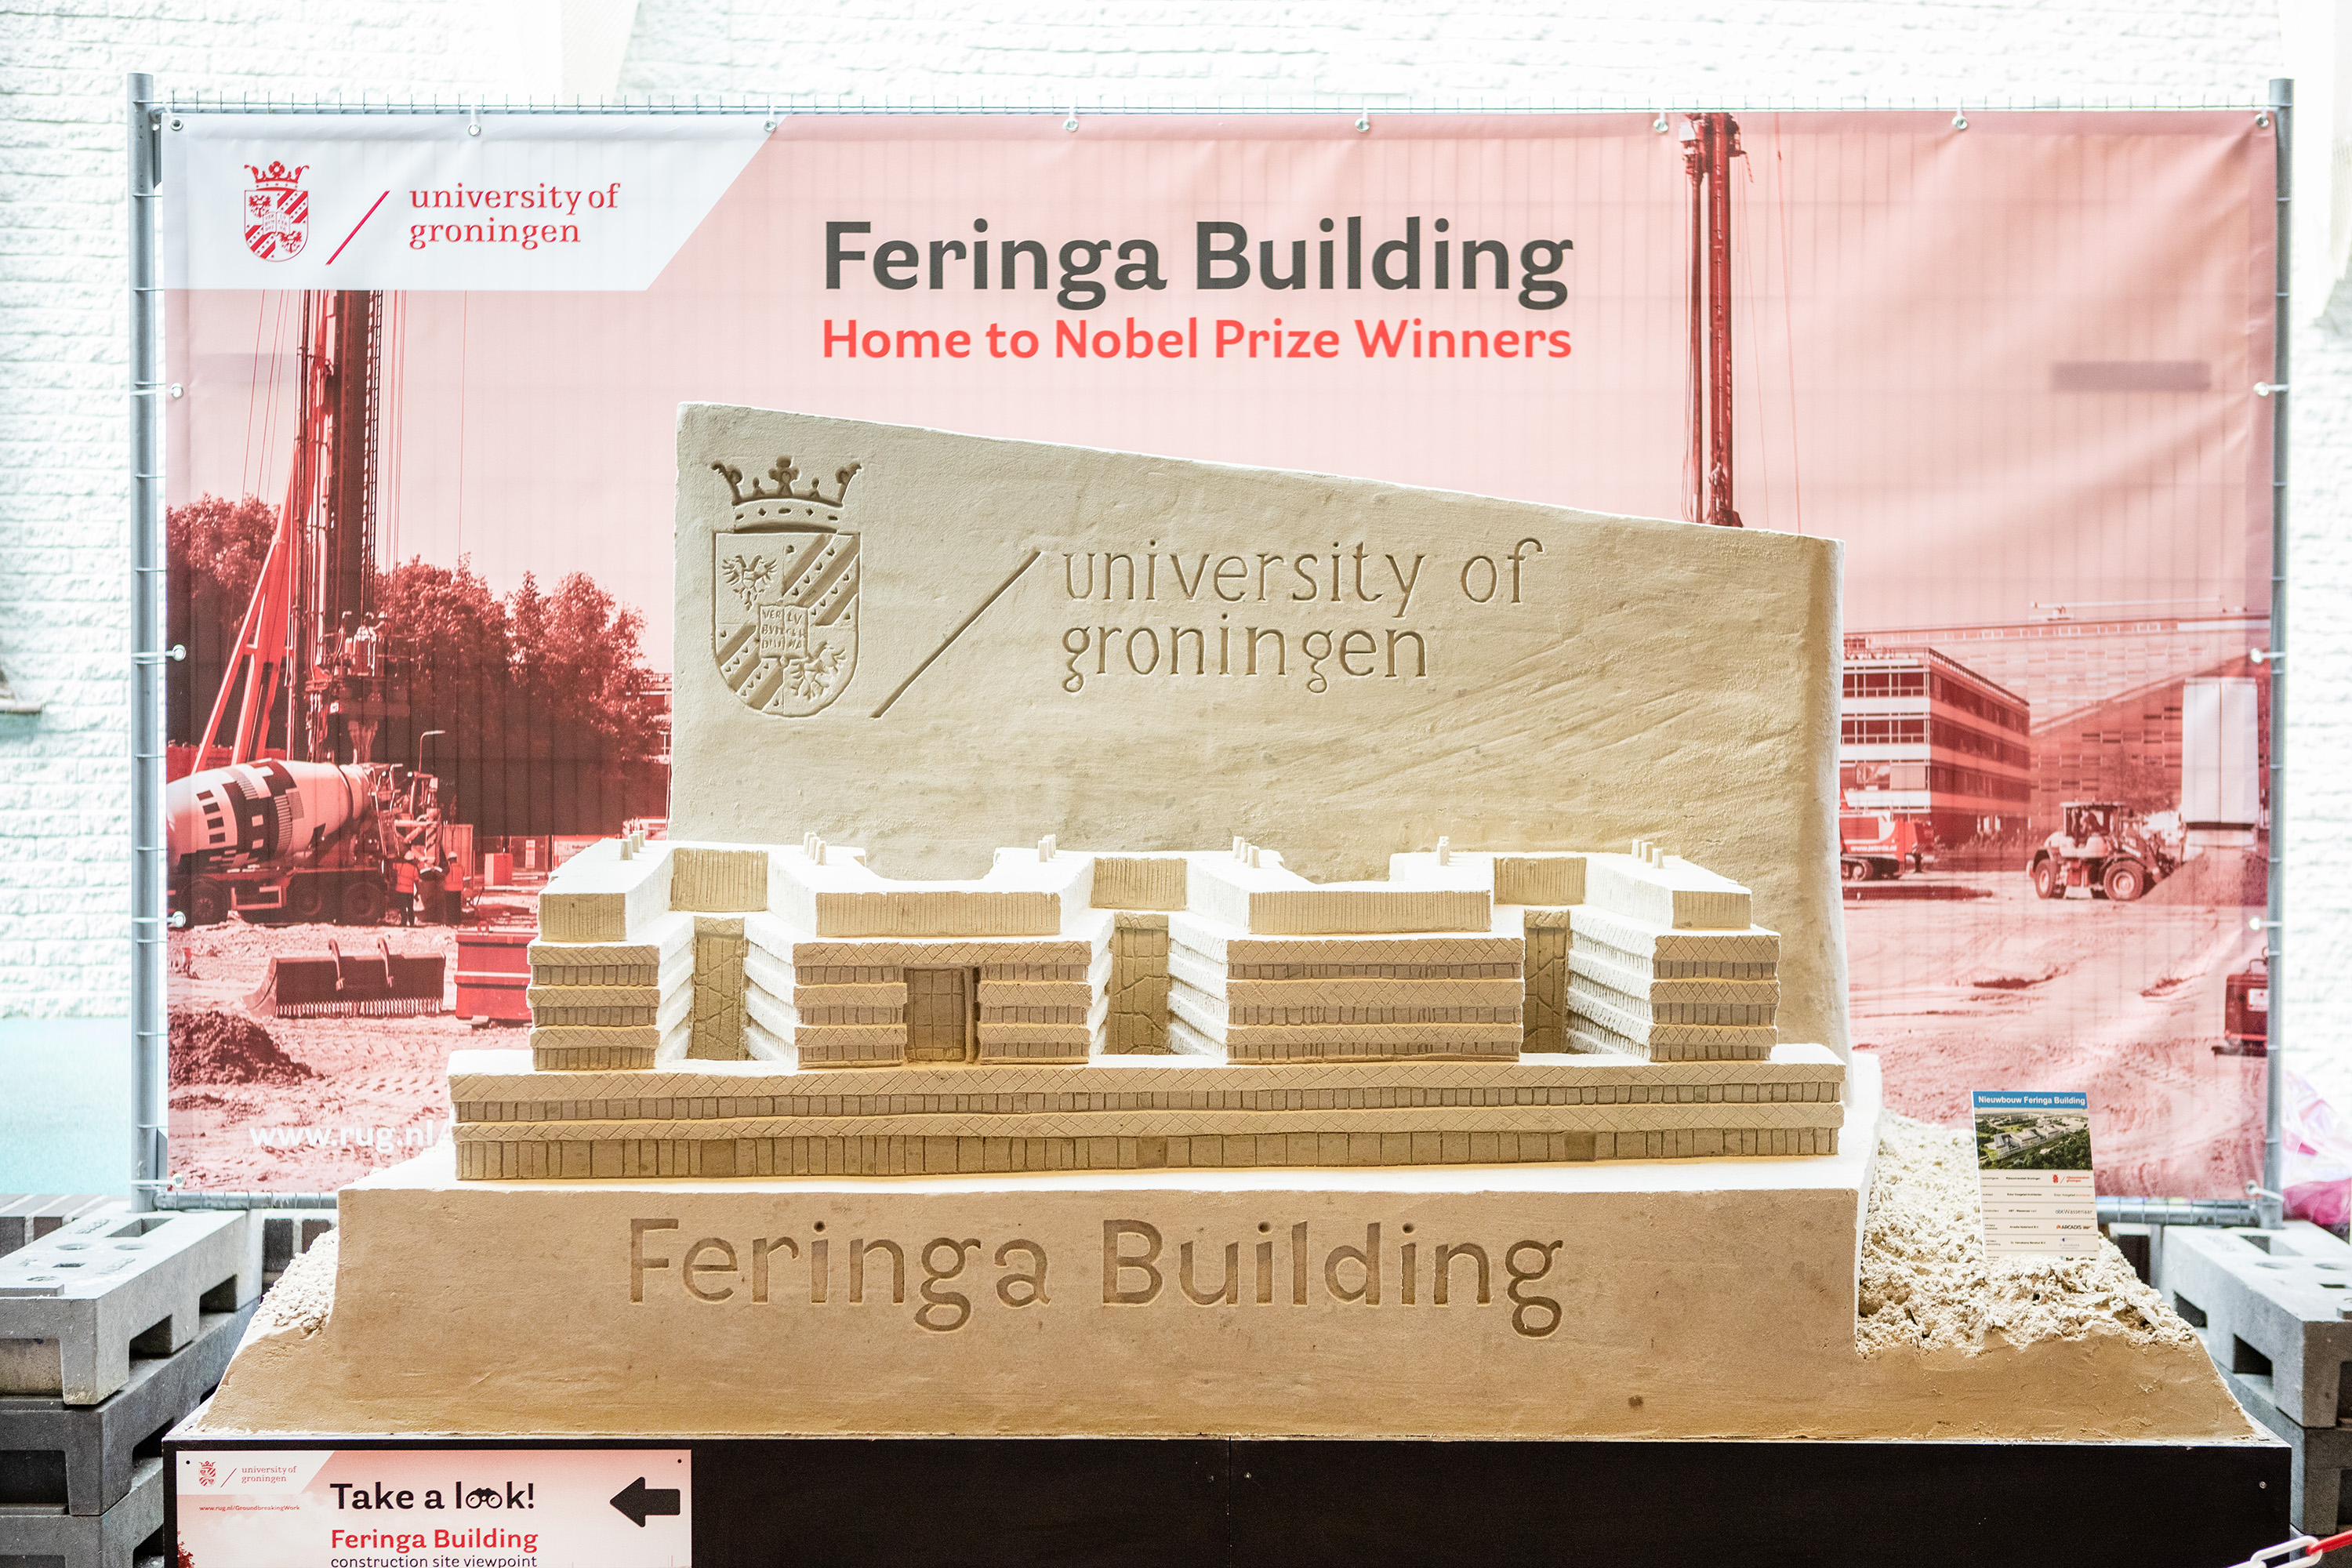 Feringa Building | Construction Kickoff september 2019Feringa Building | Construction Kickoff September 2019